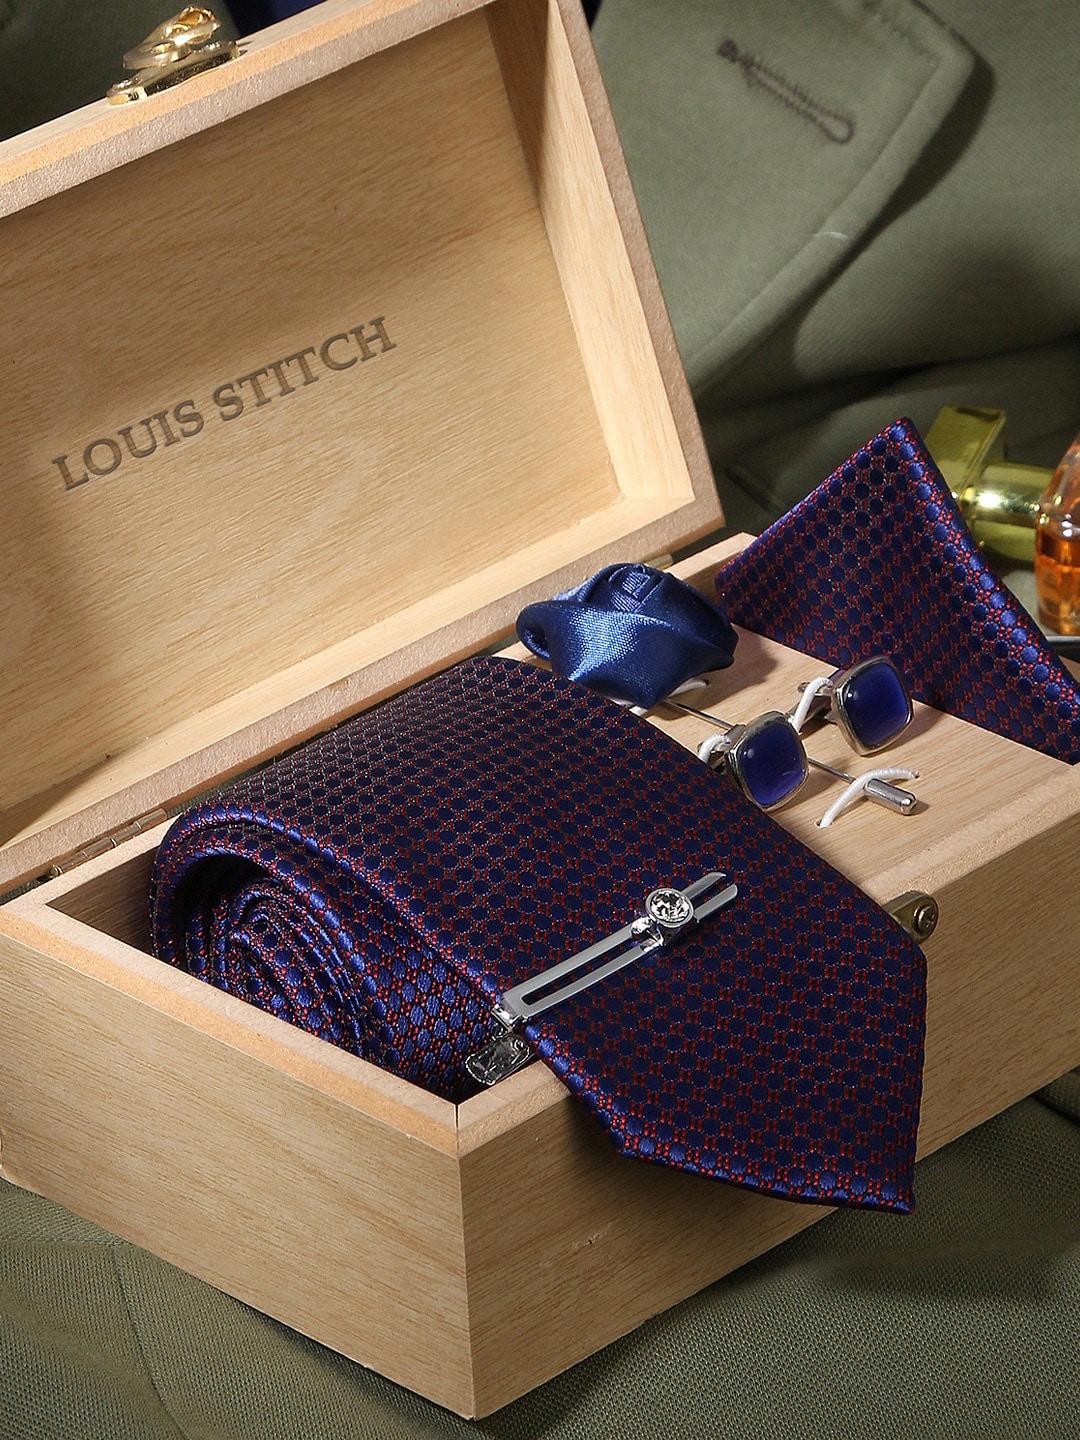 louis stitch men purple & blue silk accessory gift set